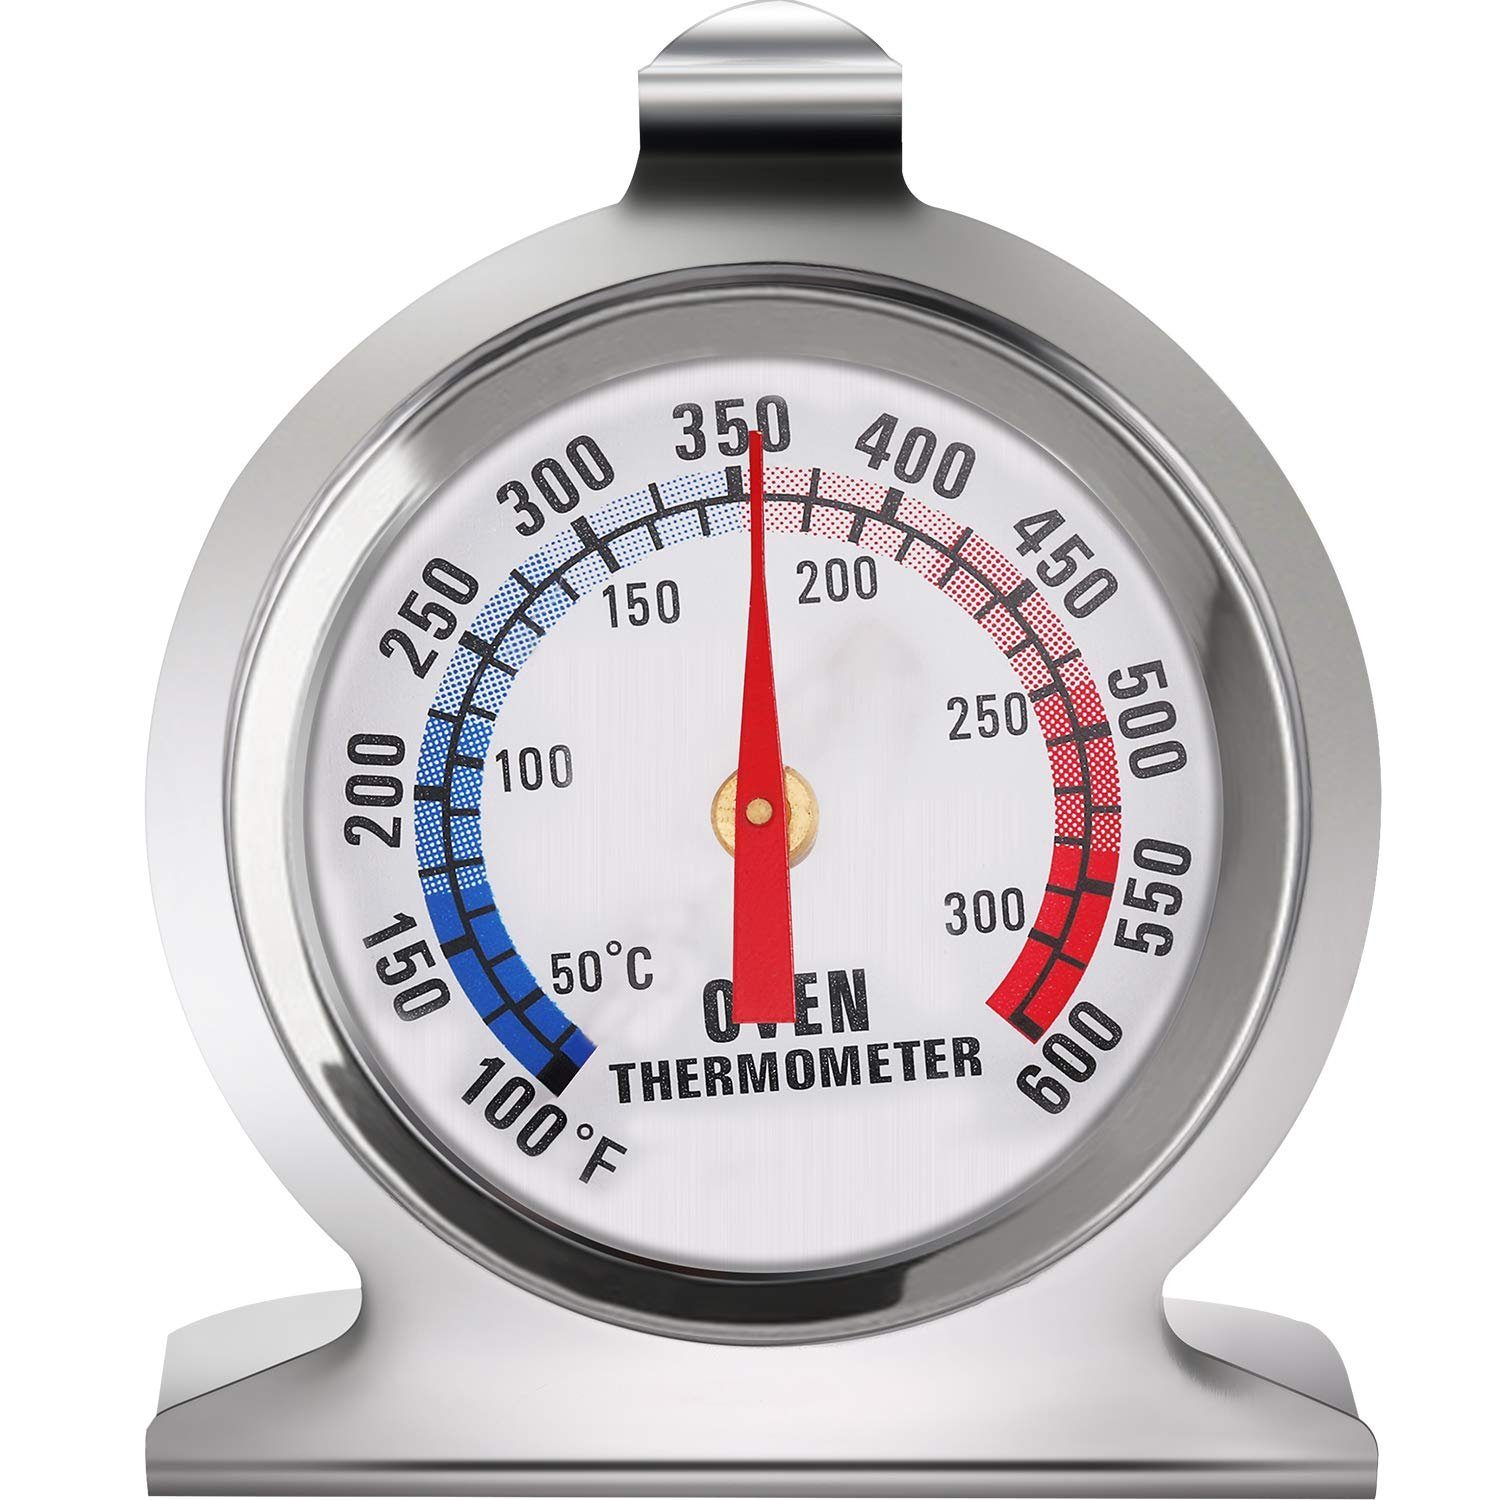 Edelstahl-Ofenherd Thermometer Temperaturanzeige Qualität 300ºC Langlebig 